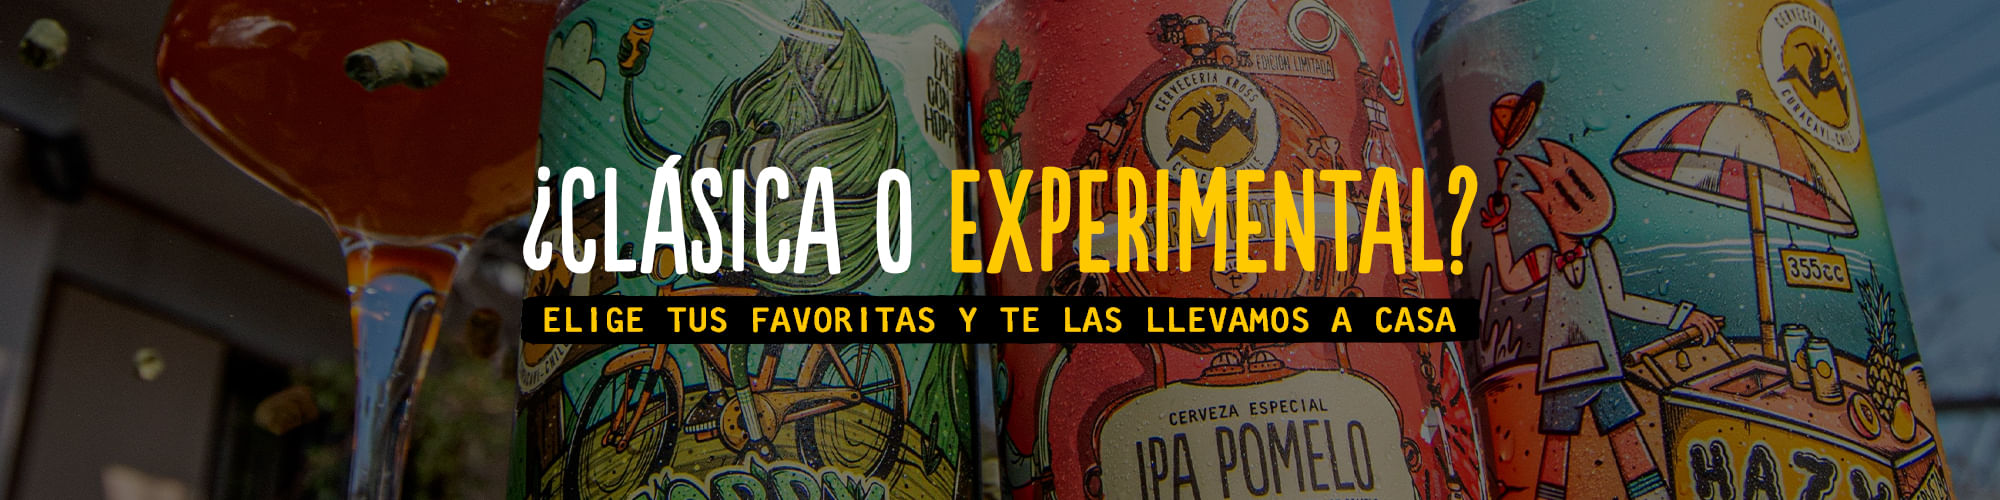 Cervezas Artesanales Kross - Despachamos a todo Chile